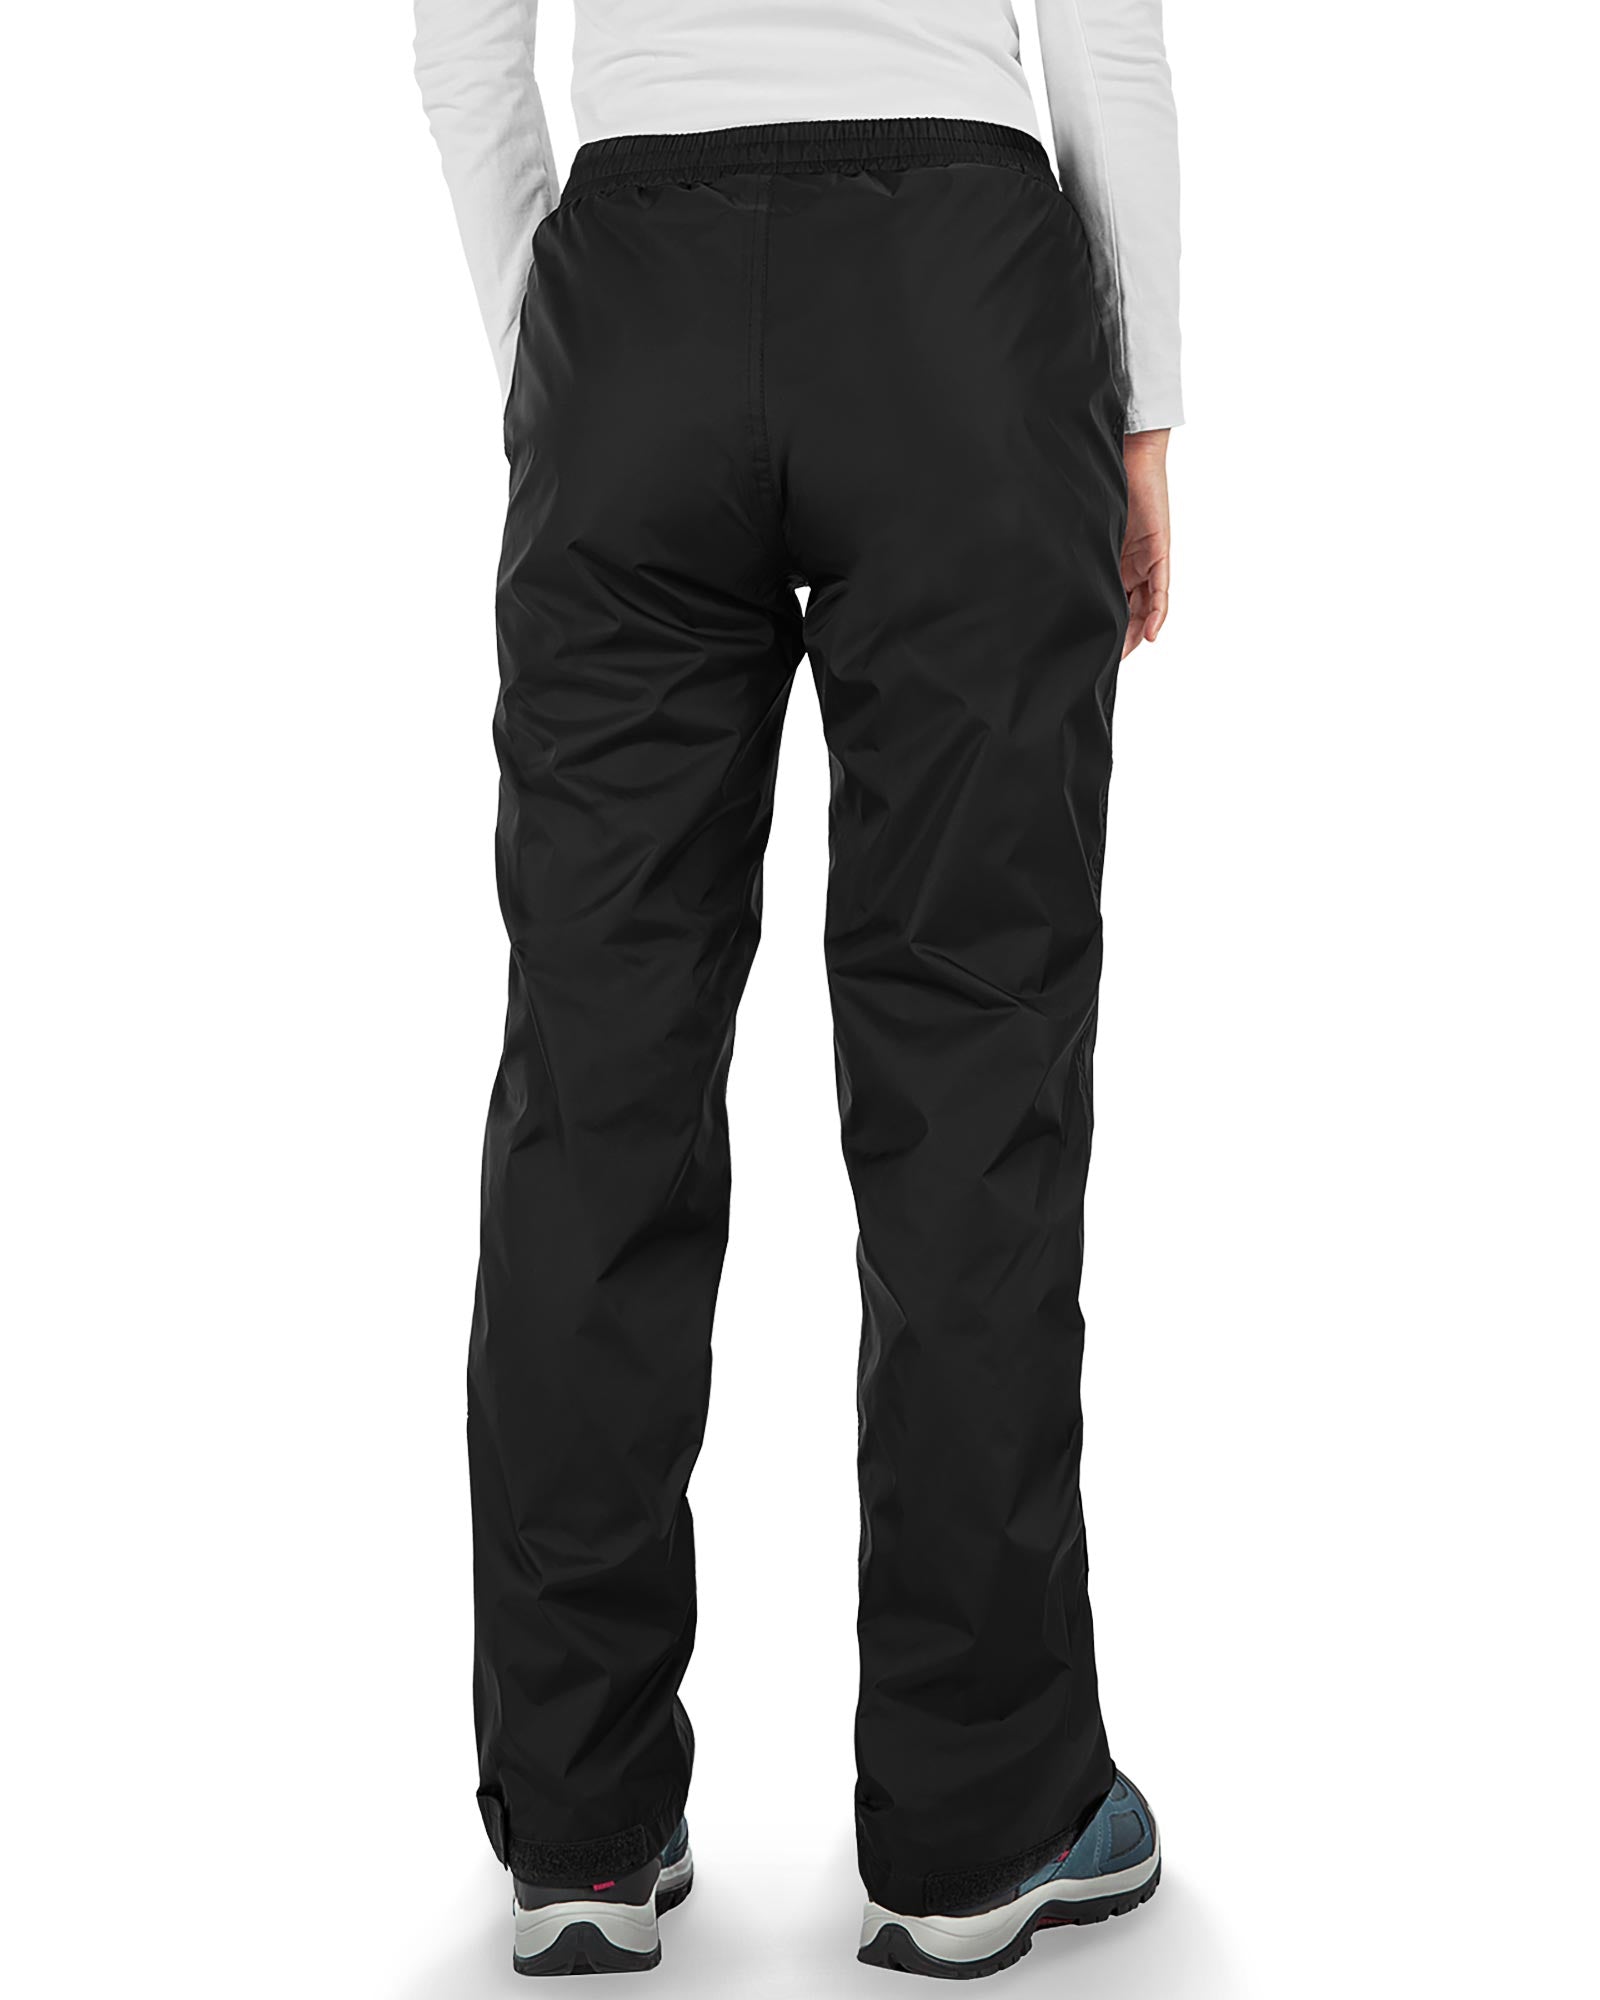 Women's Rain Pants with Reflective and Adjustable Design: 0.55 lbs